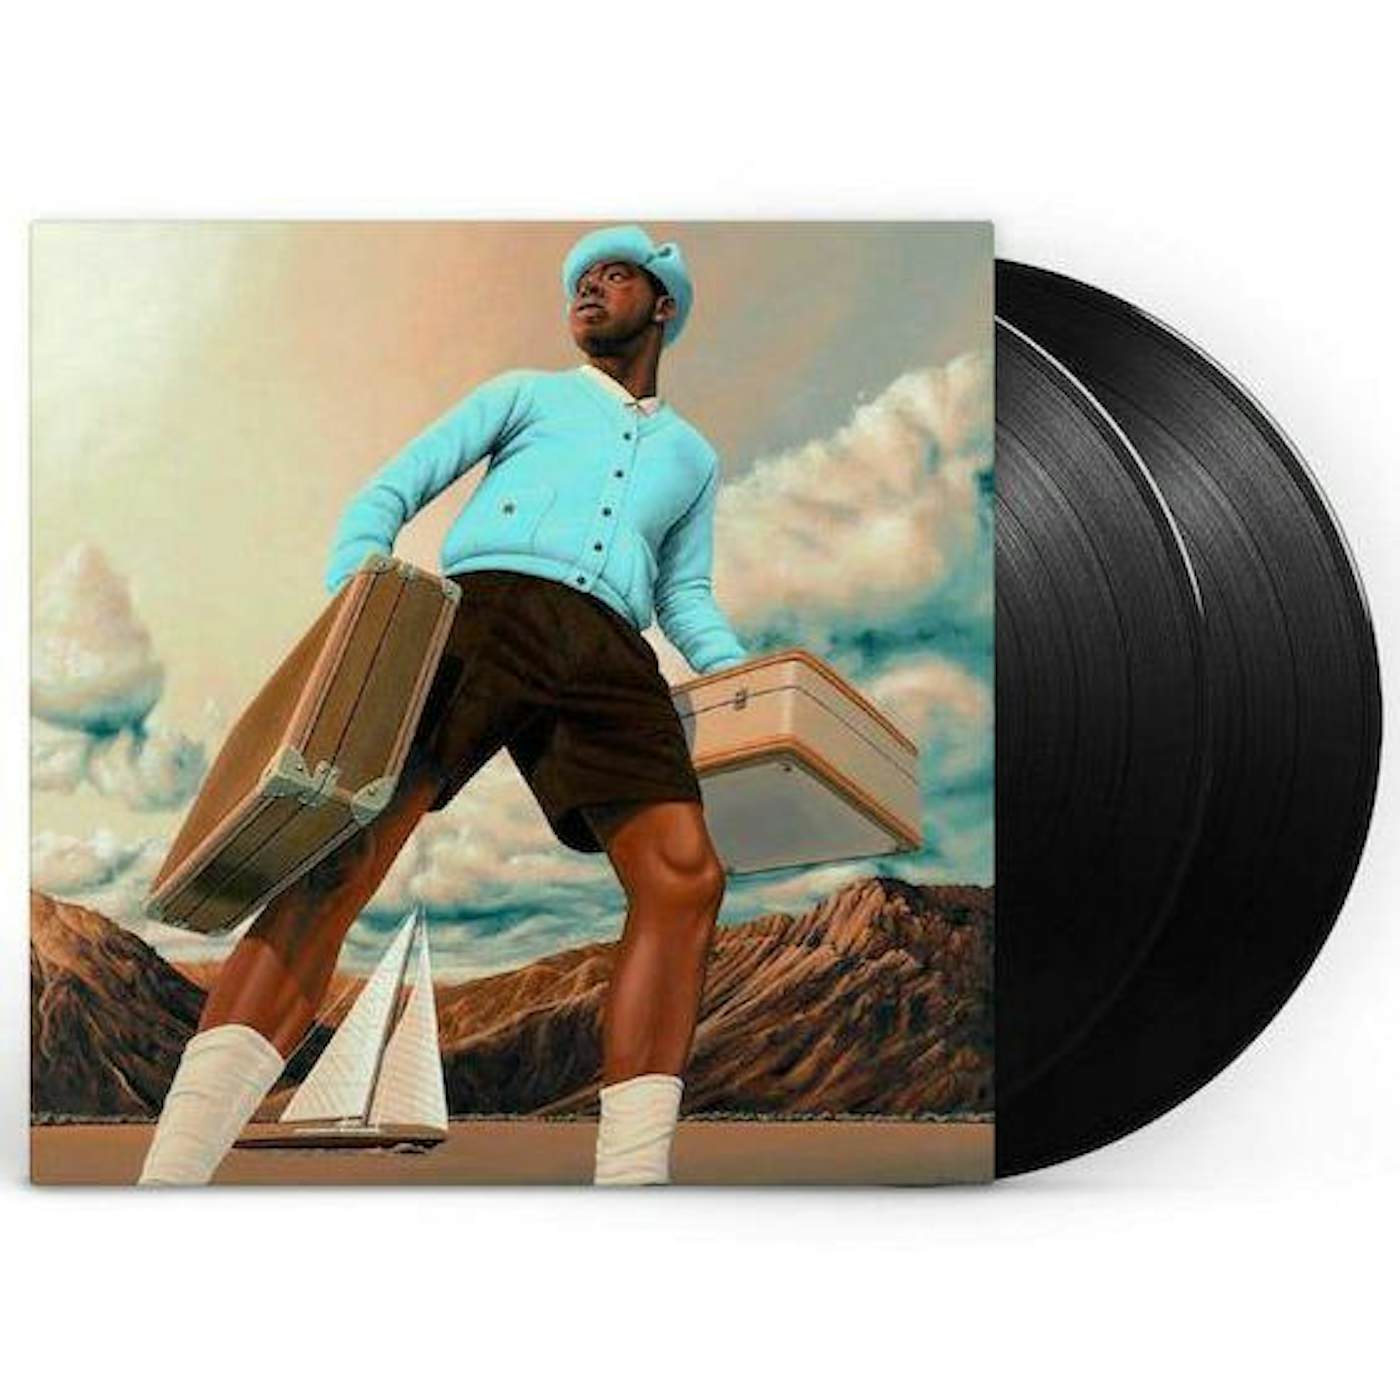 Tyler, The Creator releases new album, Igor, on limited vinyl